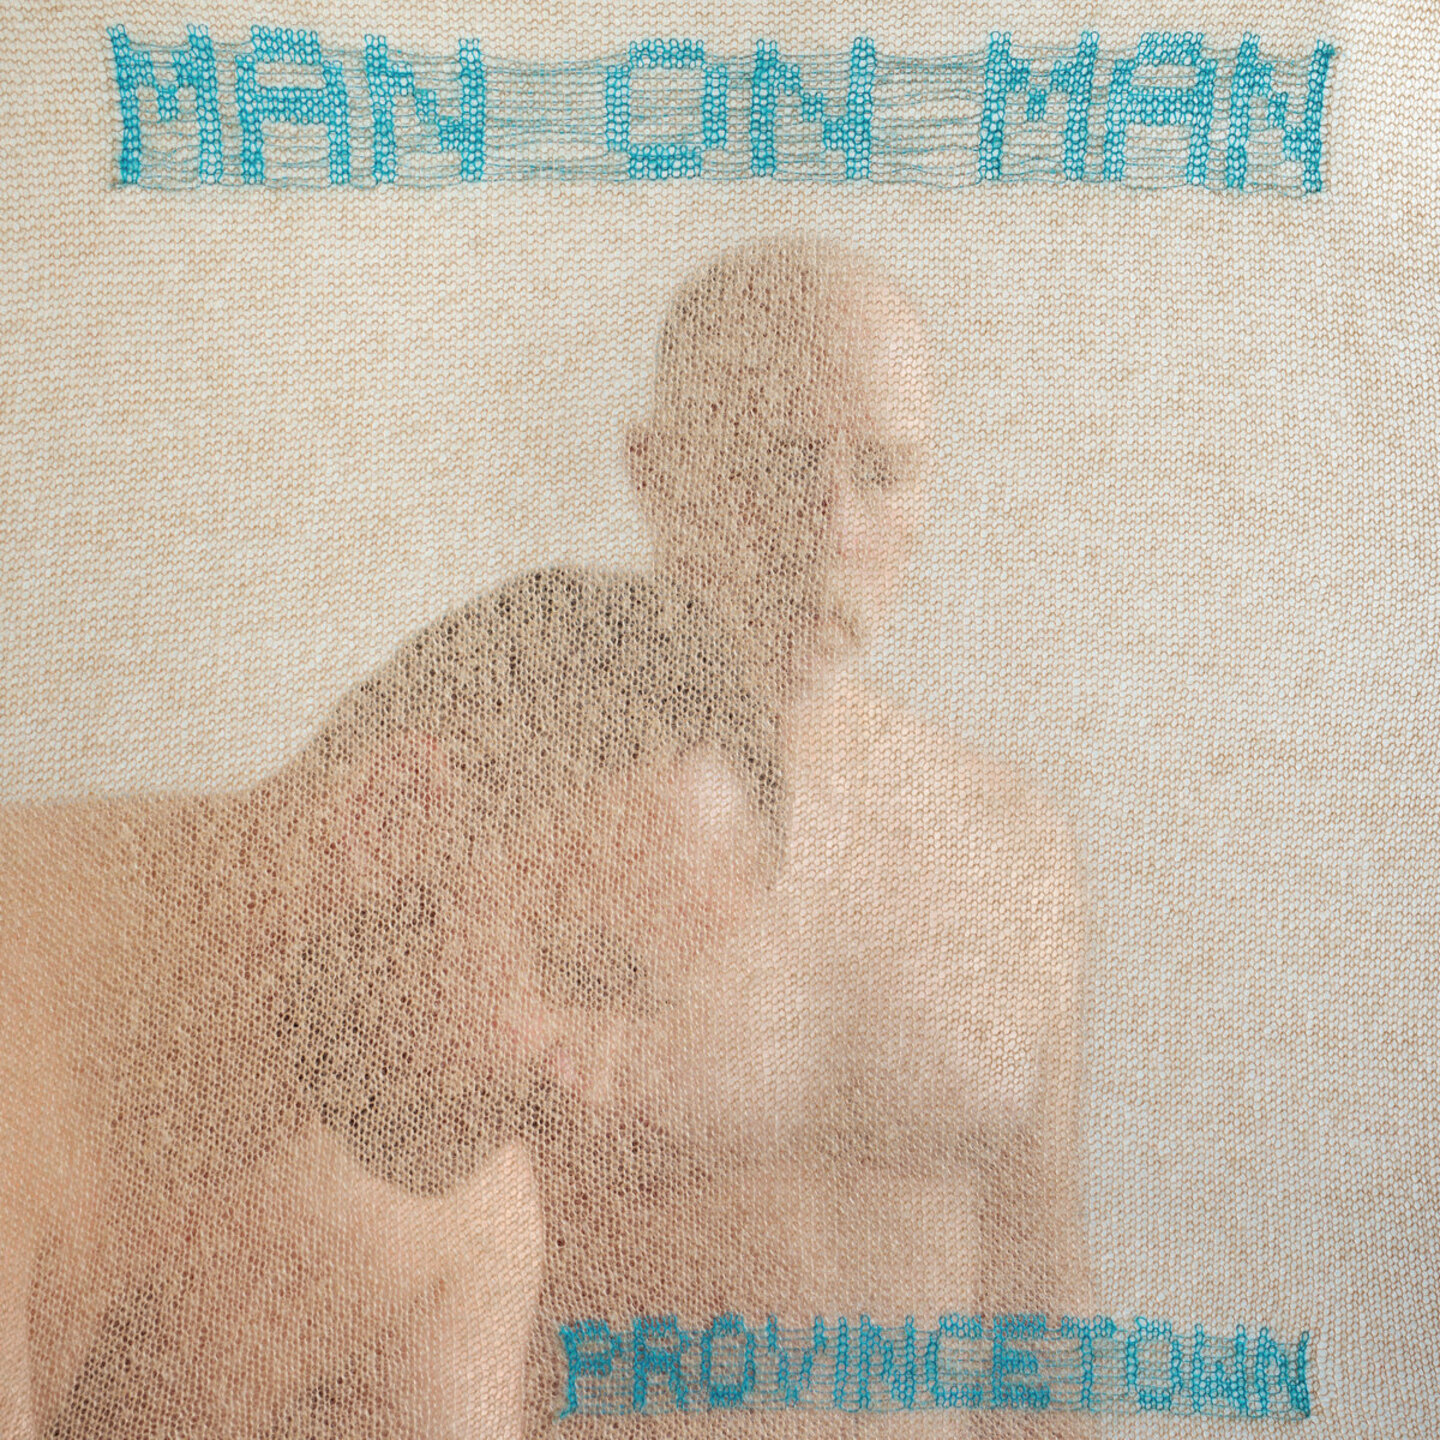 MAN ON MAN - Provincetown LP (Baby Blue Vinyl)